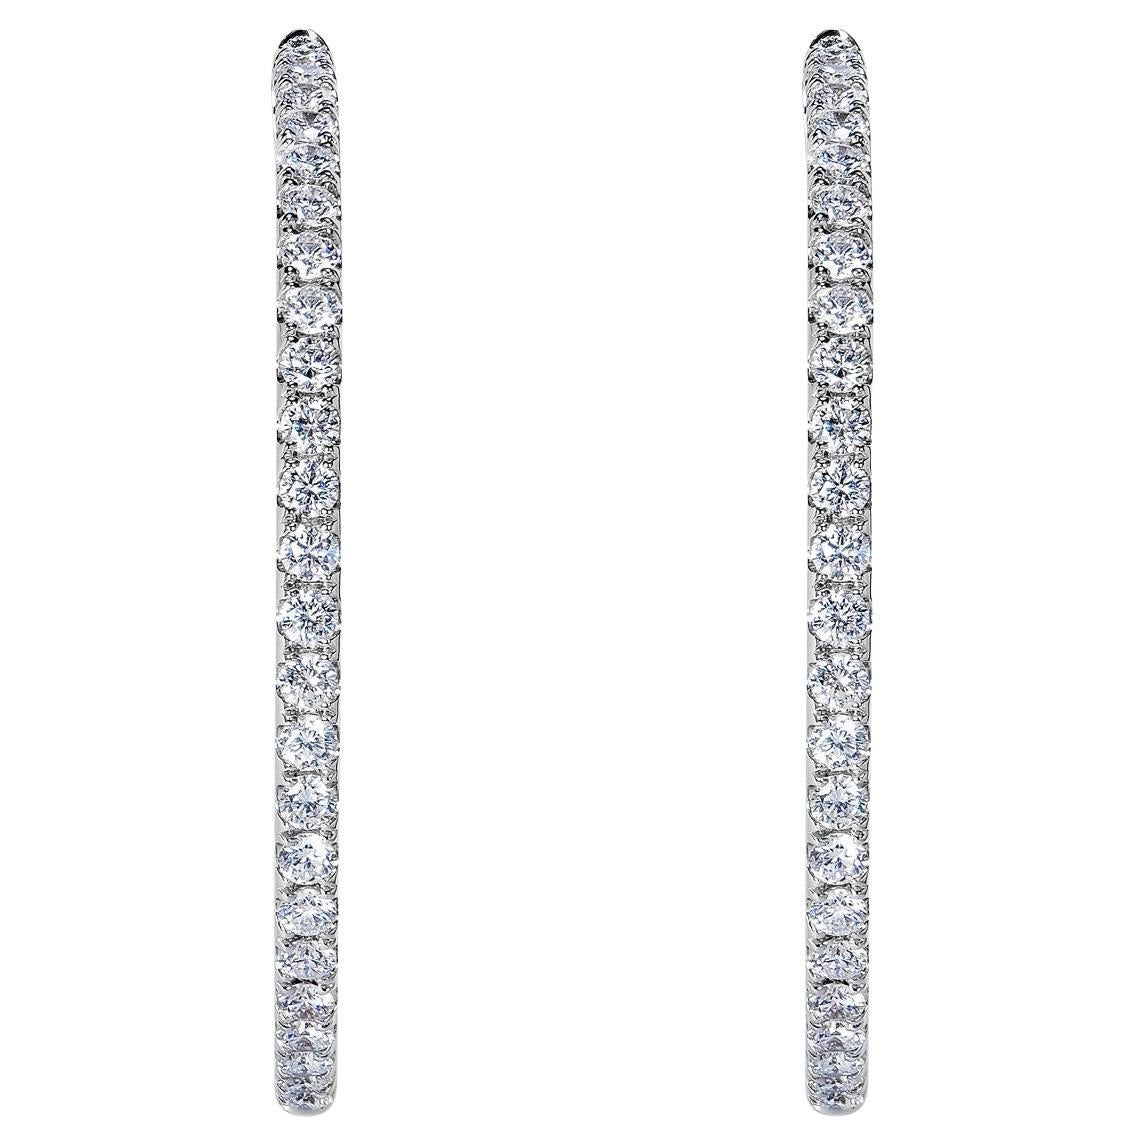 Diamond Hoop Earrings:

Carat Weight: 2.10 Carats
Shape: Round Brilliant Cut
Metal: 18 Karat White Gold
Style: Hoop Earrings